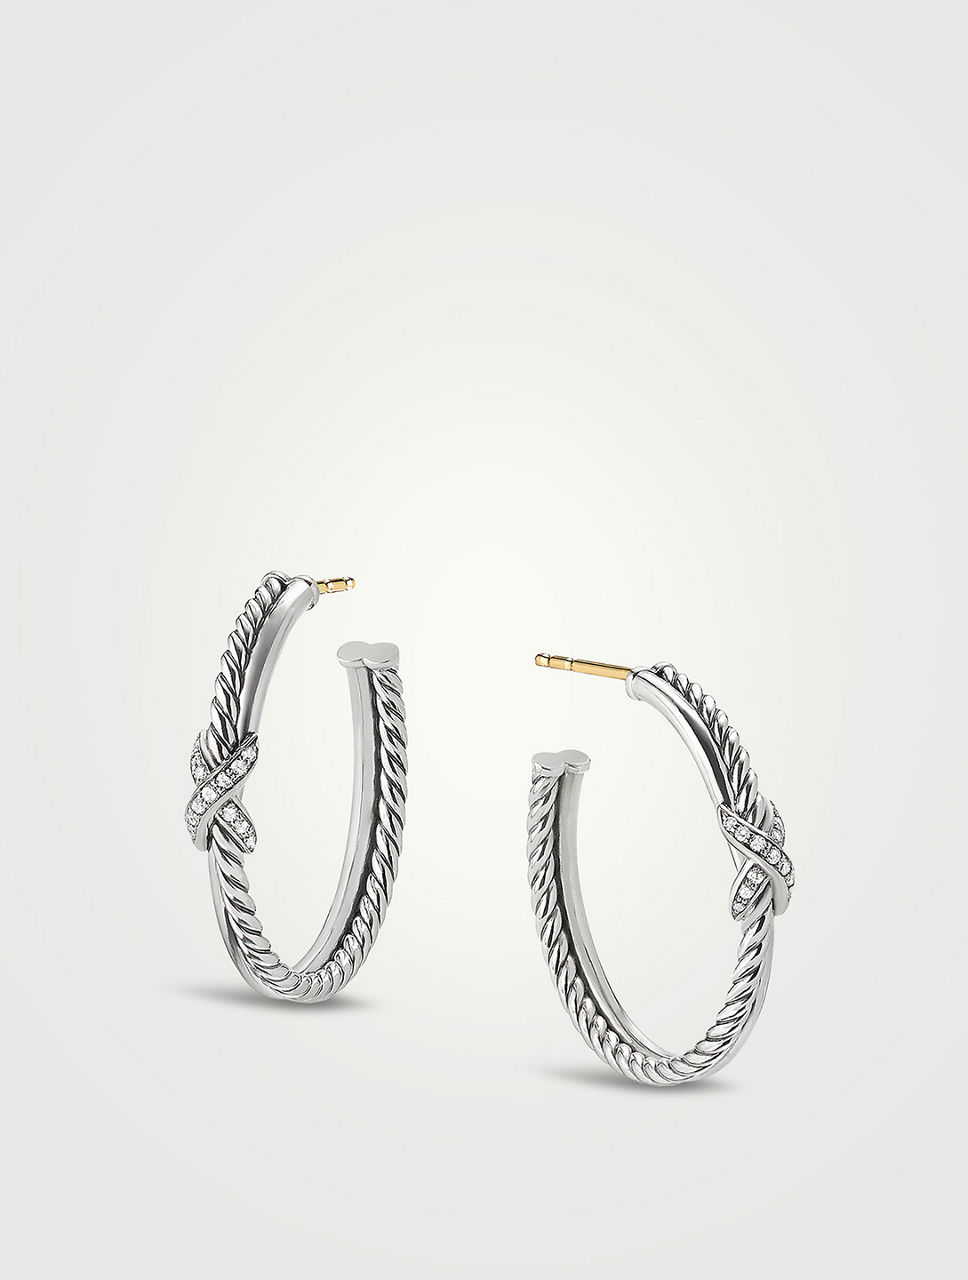 Petite X Hoop Earrings In Sterling Silver With Pavé Diamonds